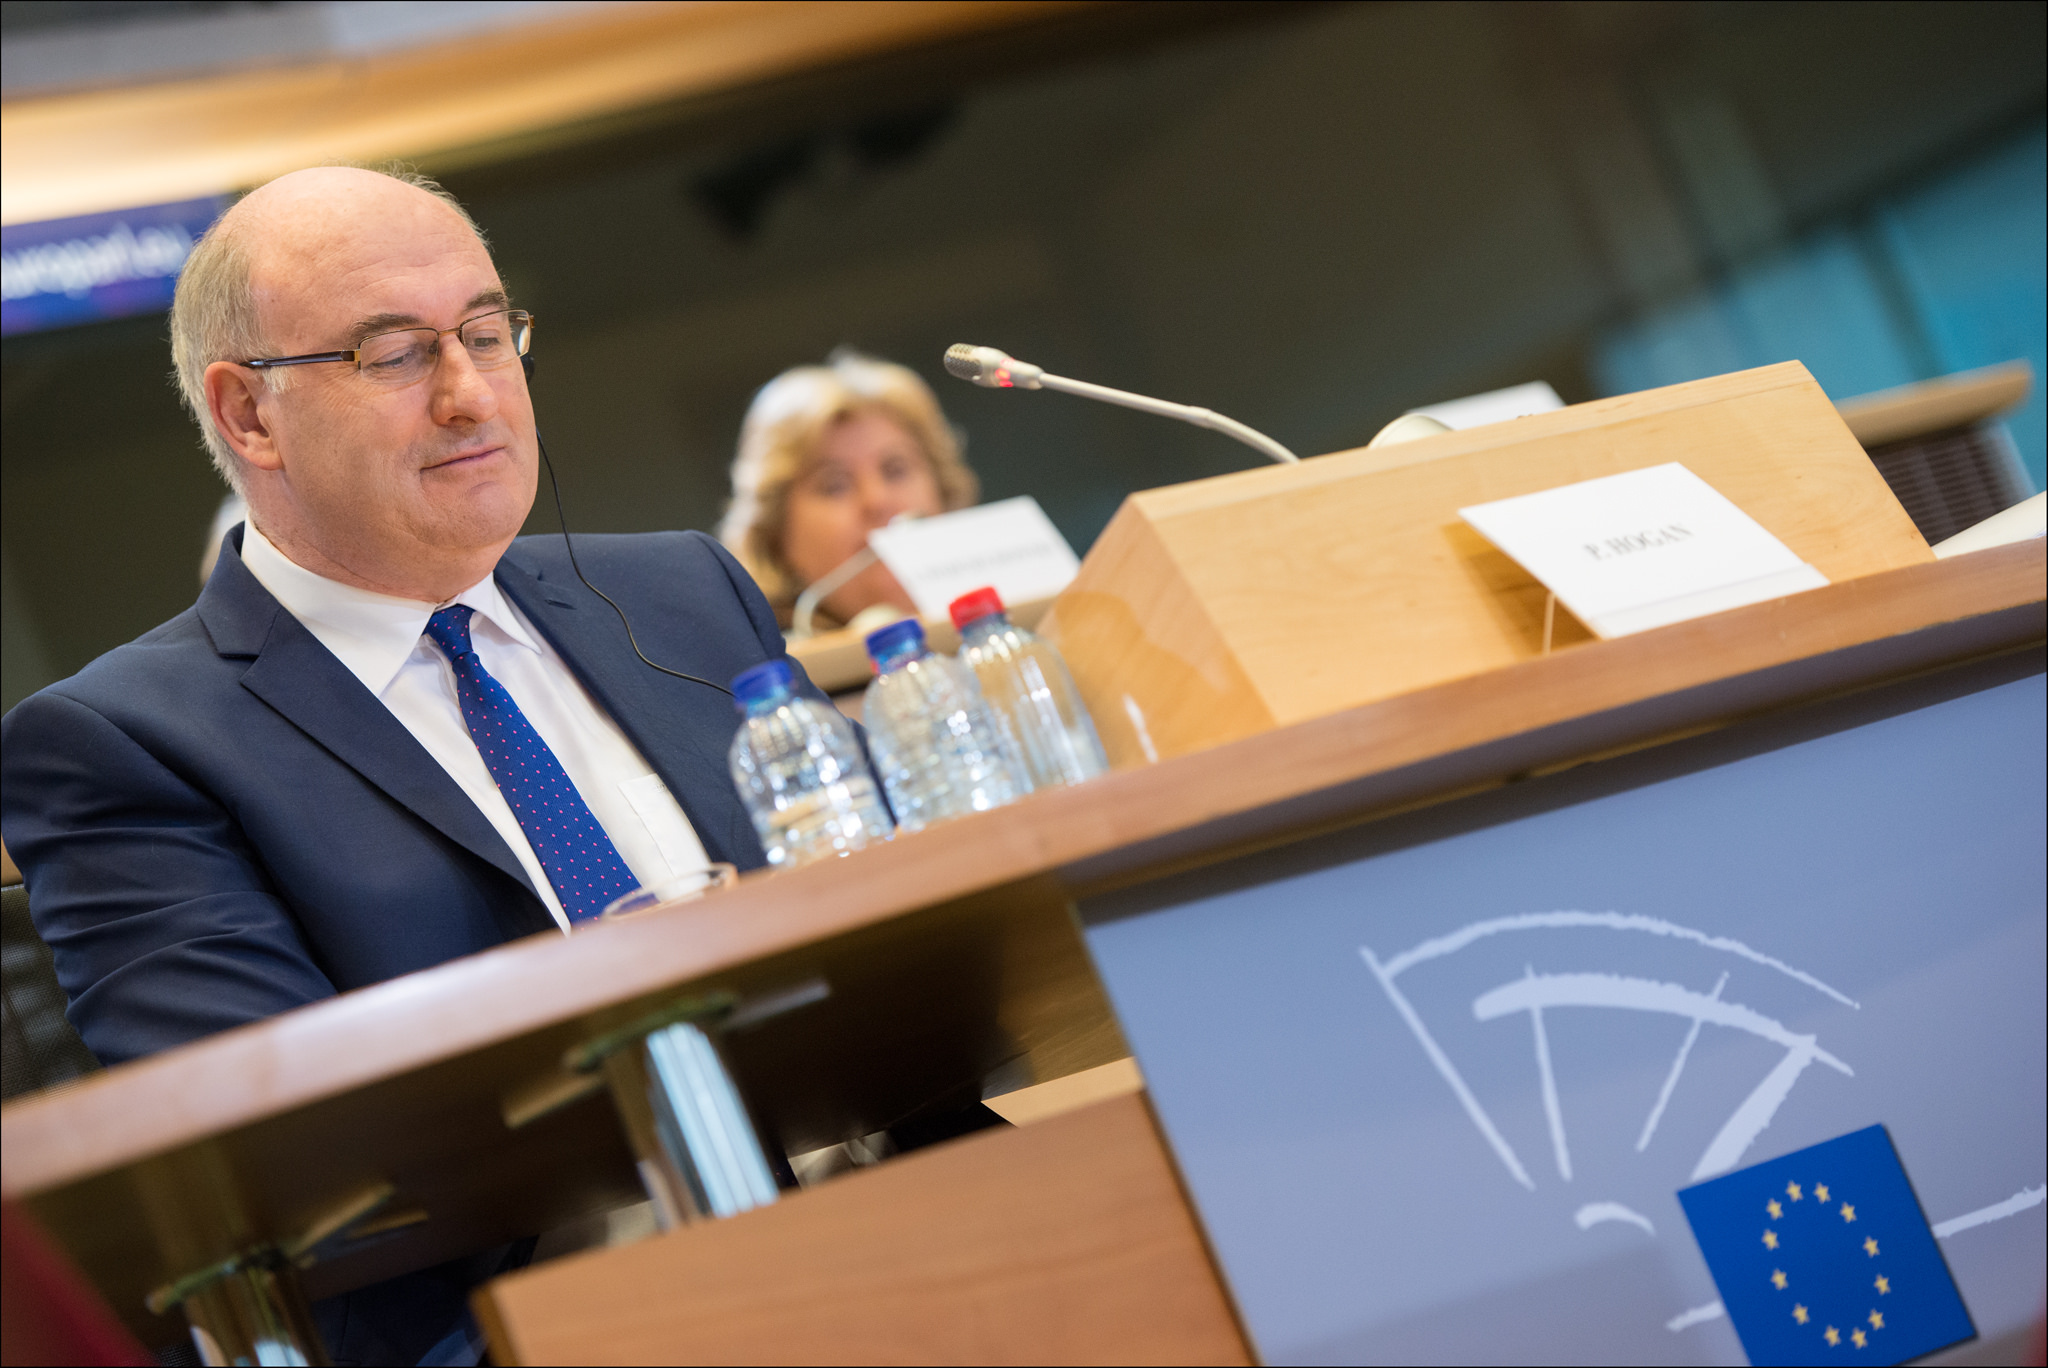 Phil Hogan Under Scrutiny at the European Parliament, "© European Union 2014 - European Parliament" licensed under Creative Commons